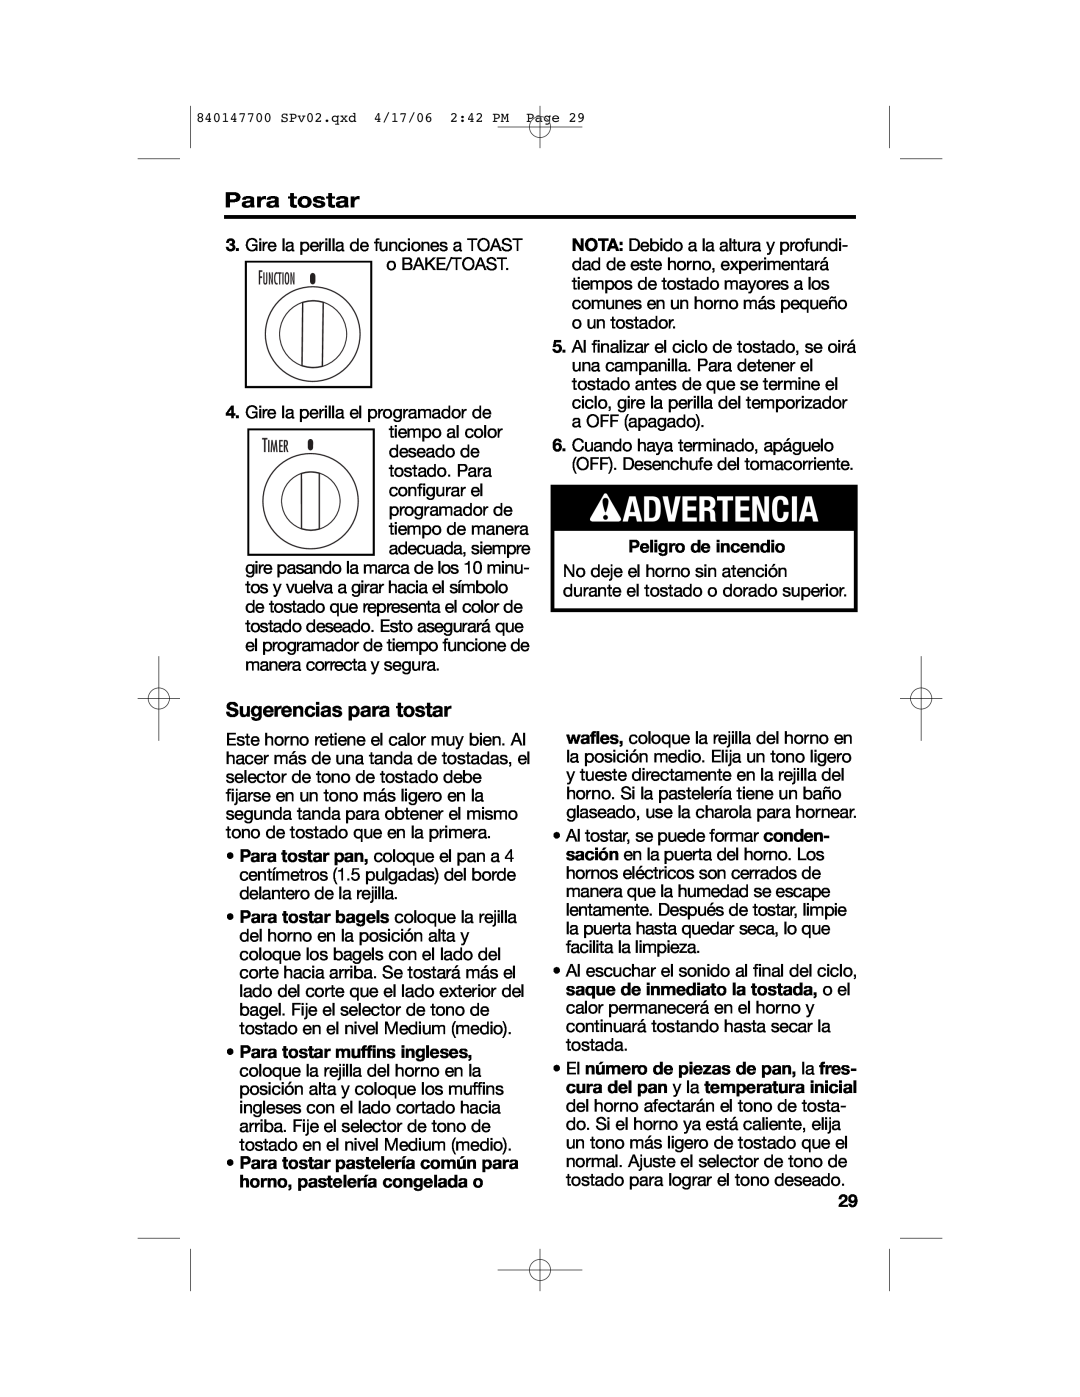 Hamilton Beach 31180 manual wADVERTENCIA, Sugerencias para tostar, Peligro de incendio, Para tostar 